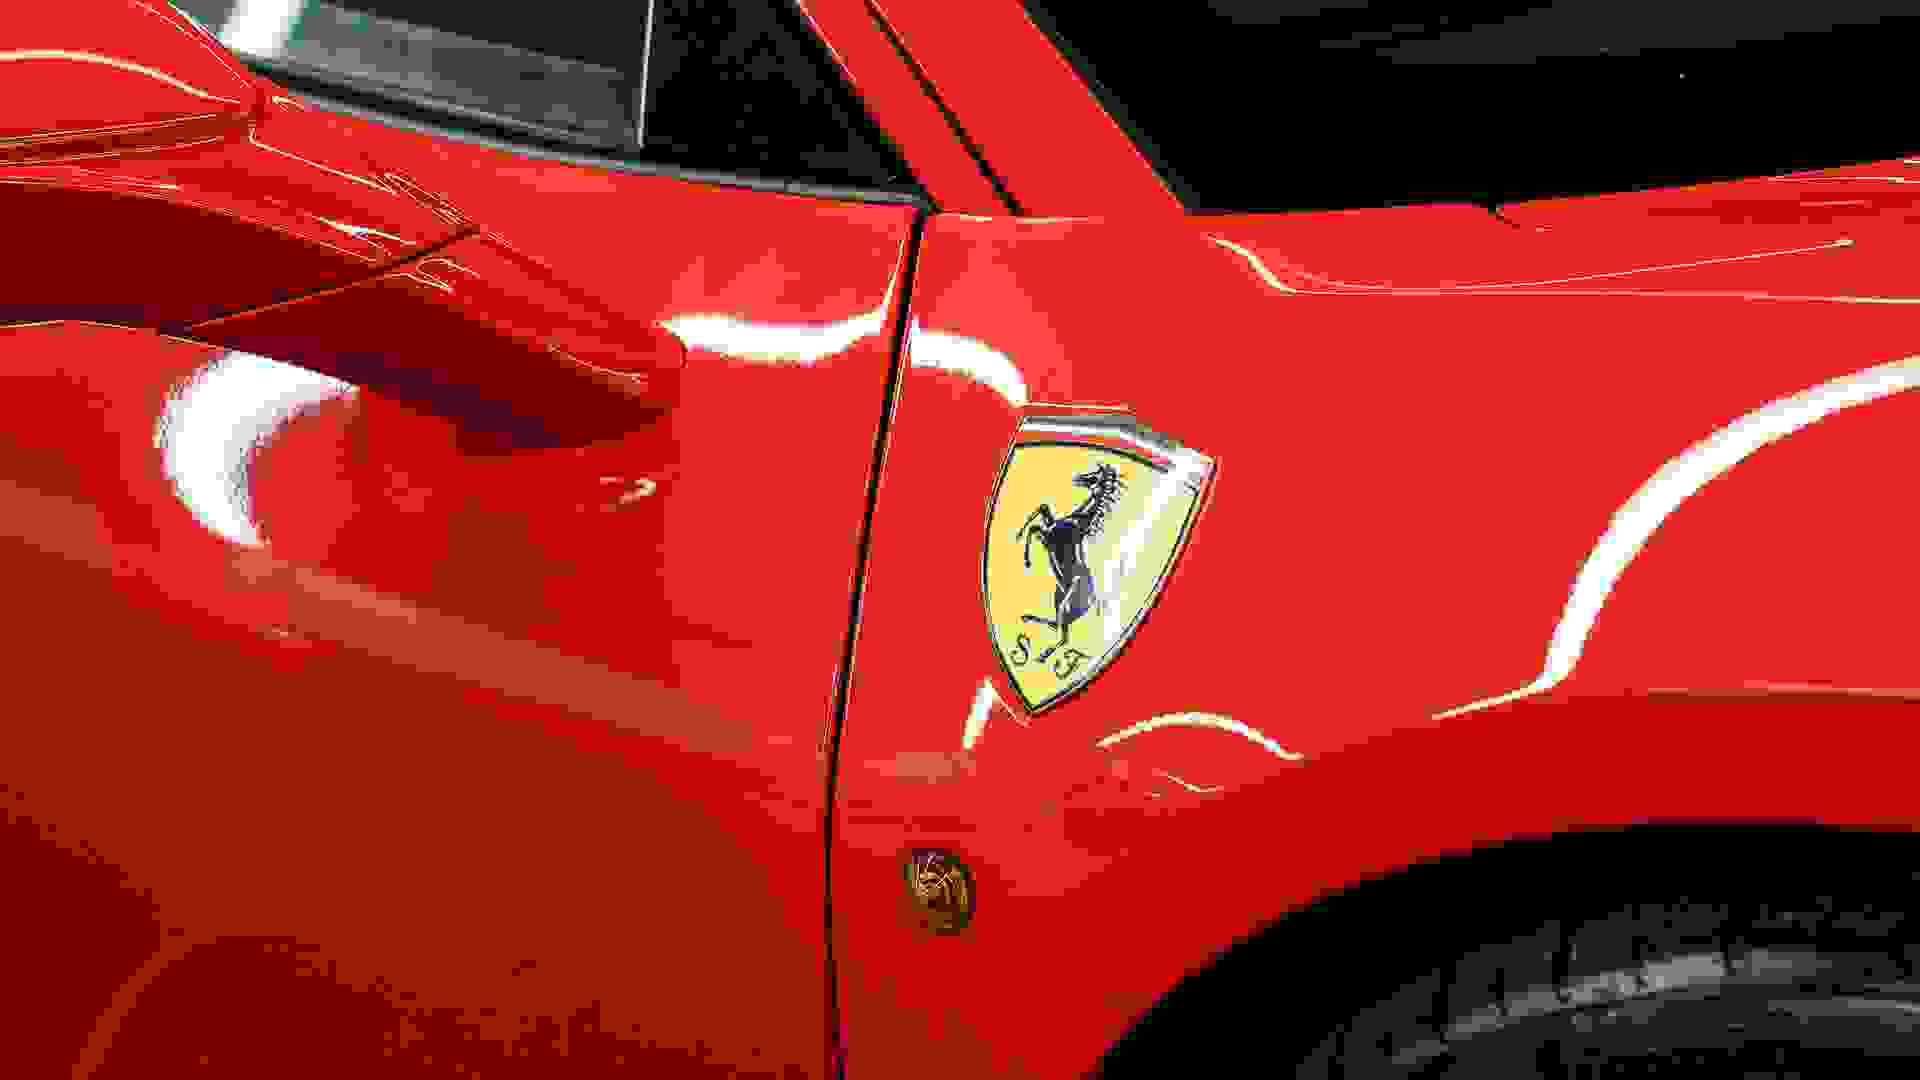 Ferrari 488 Photo a9cbfea9-7c4f-405a-815a-0a73b581b246.jpg